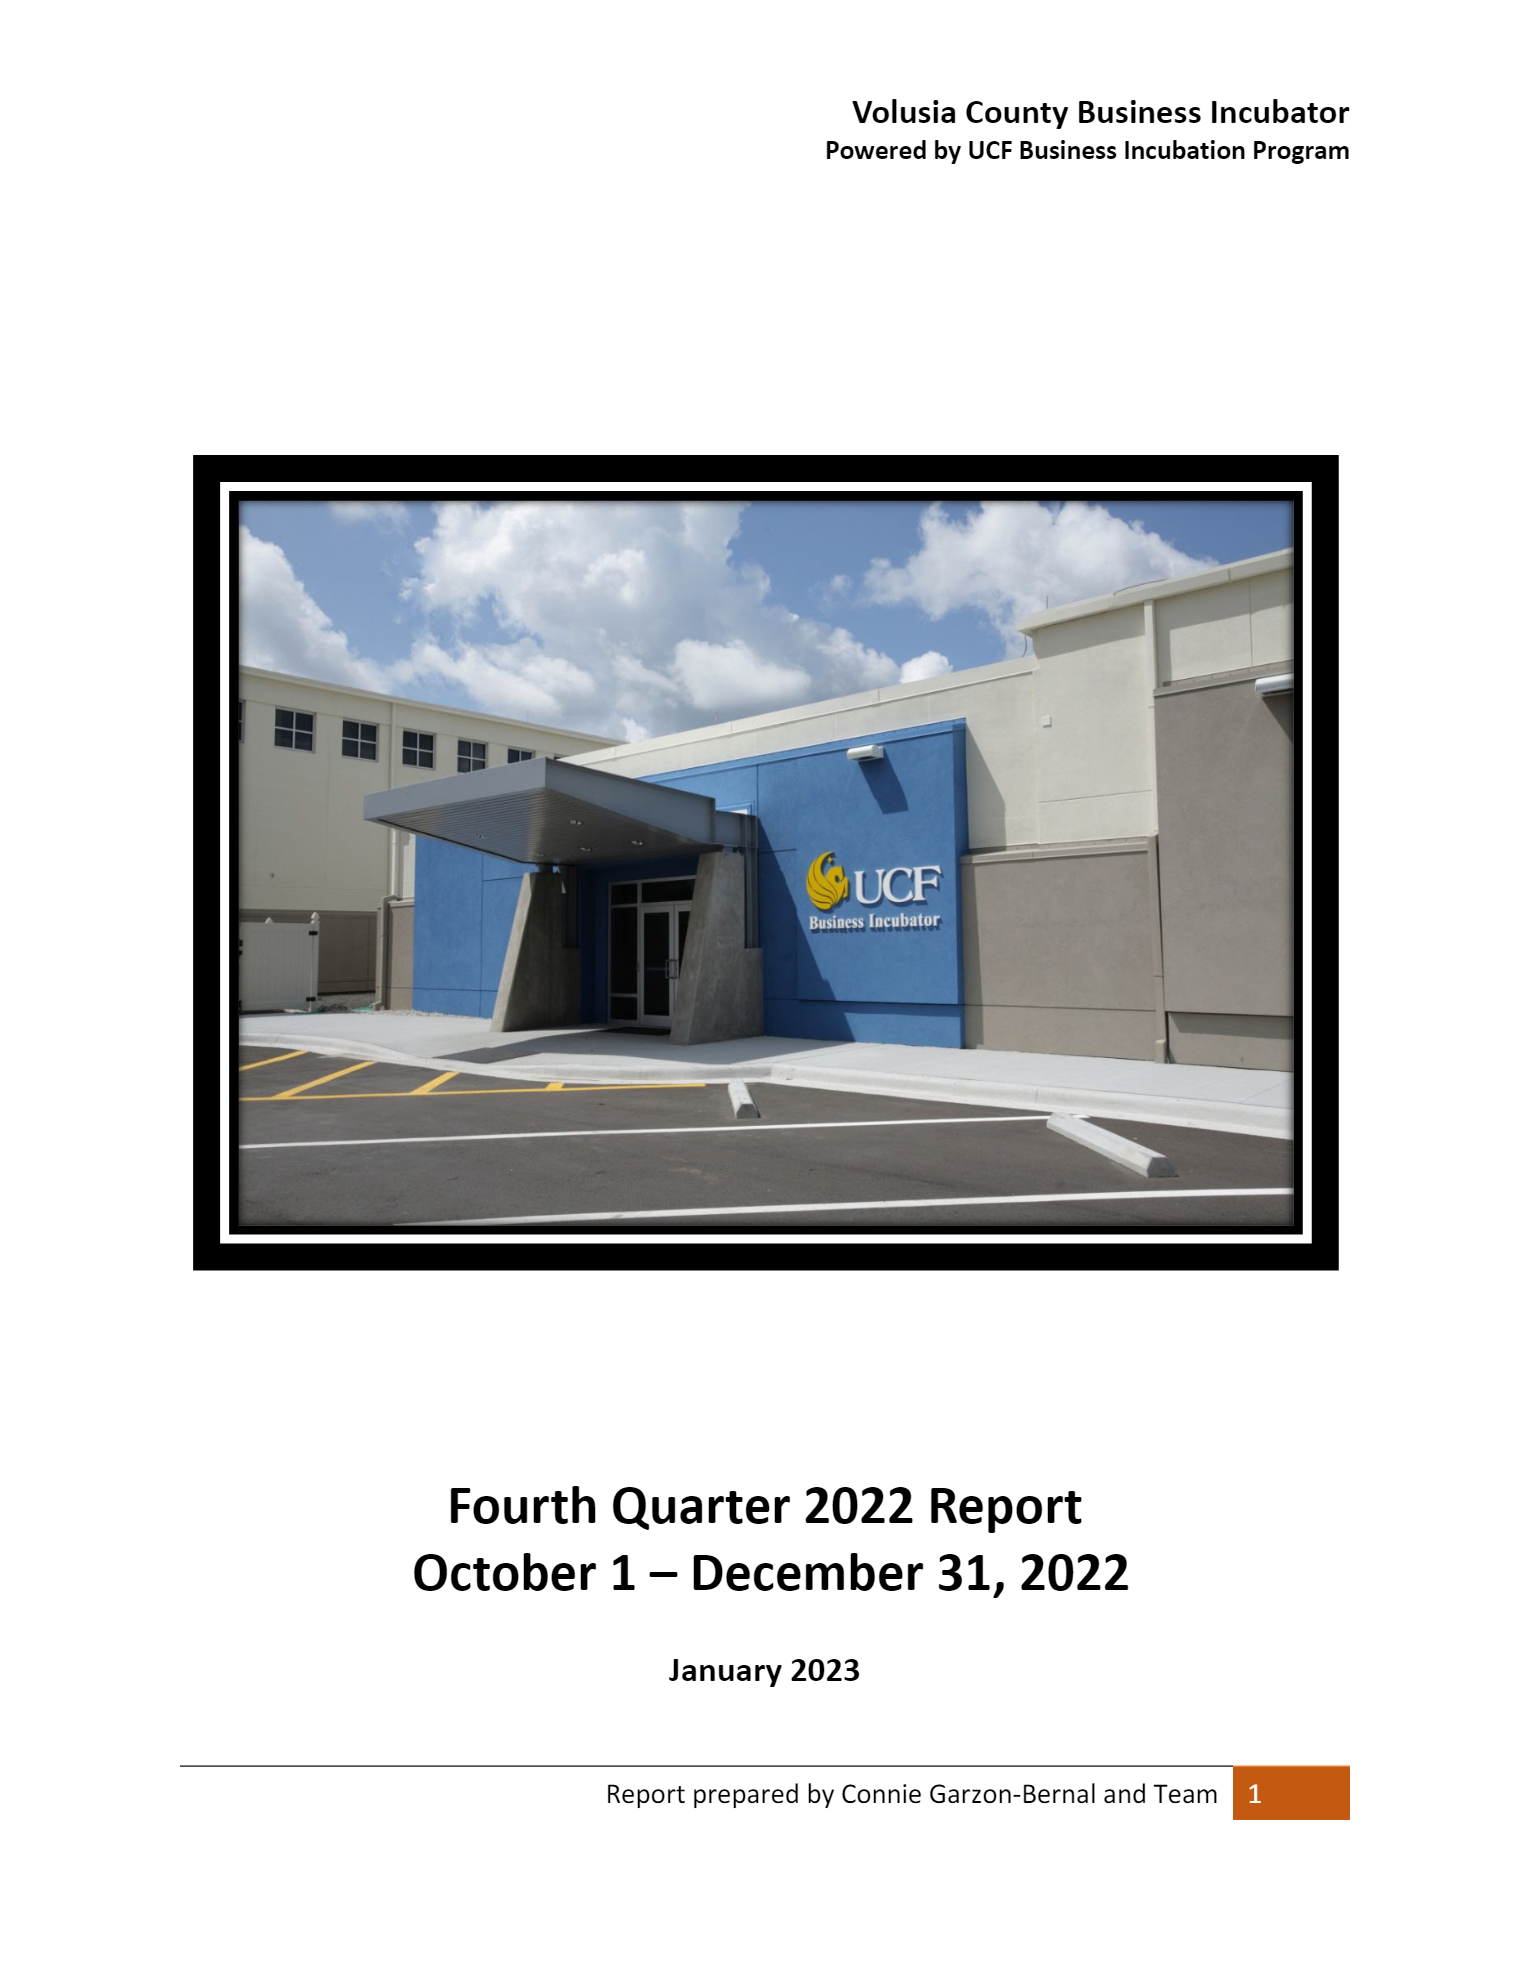 Volusia County Business Incubator Quarterly Report